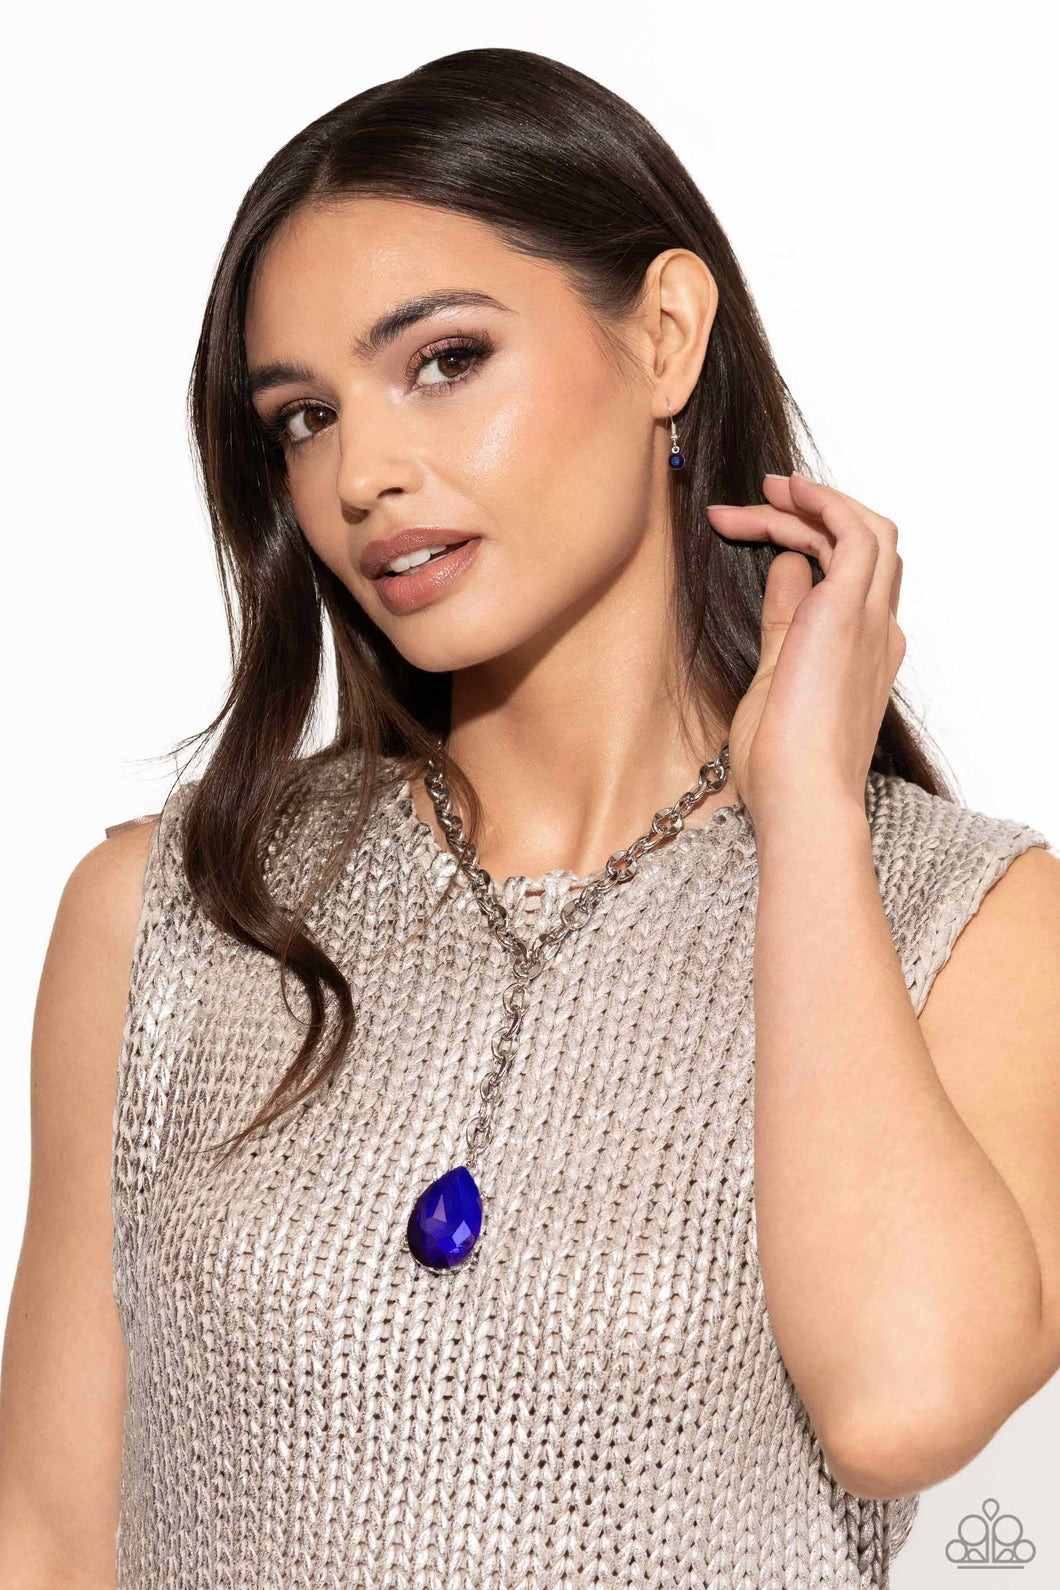 Benevolent Bling - Purple Necklace